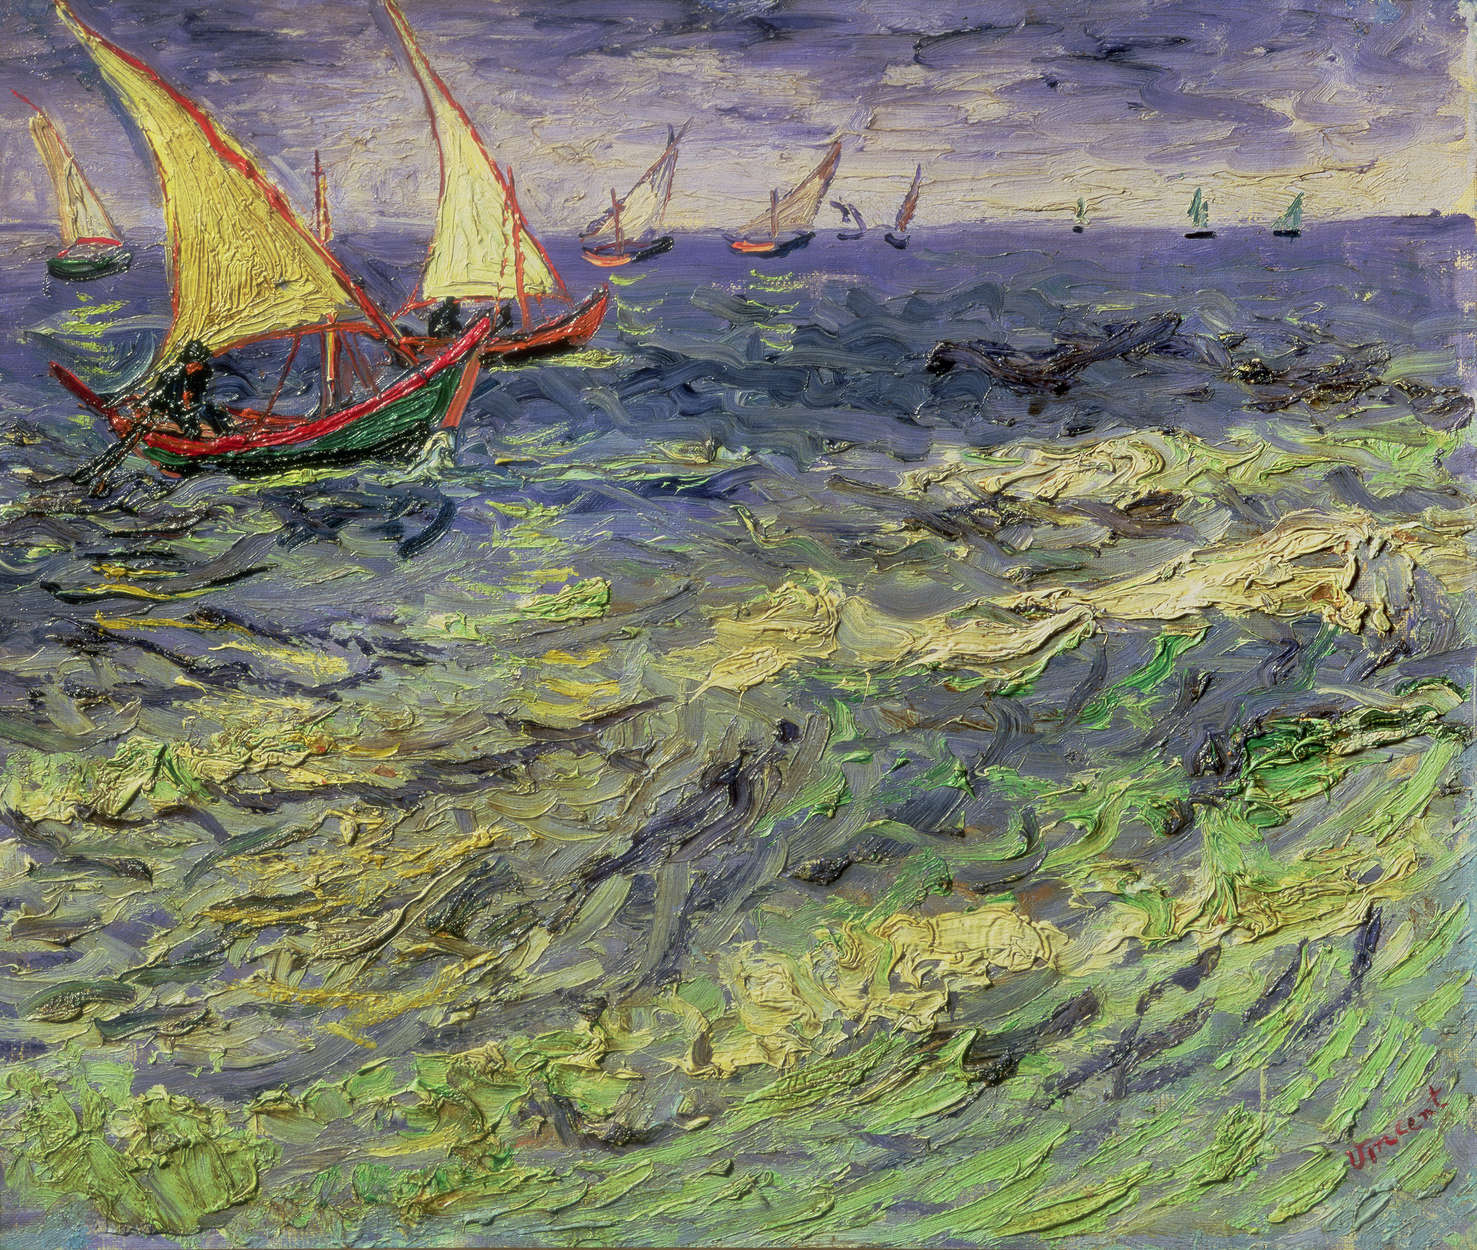             Photo wallpaper "Seascape at Saintes-Maries " by Vincent van Gogh
        